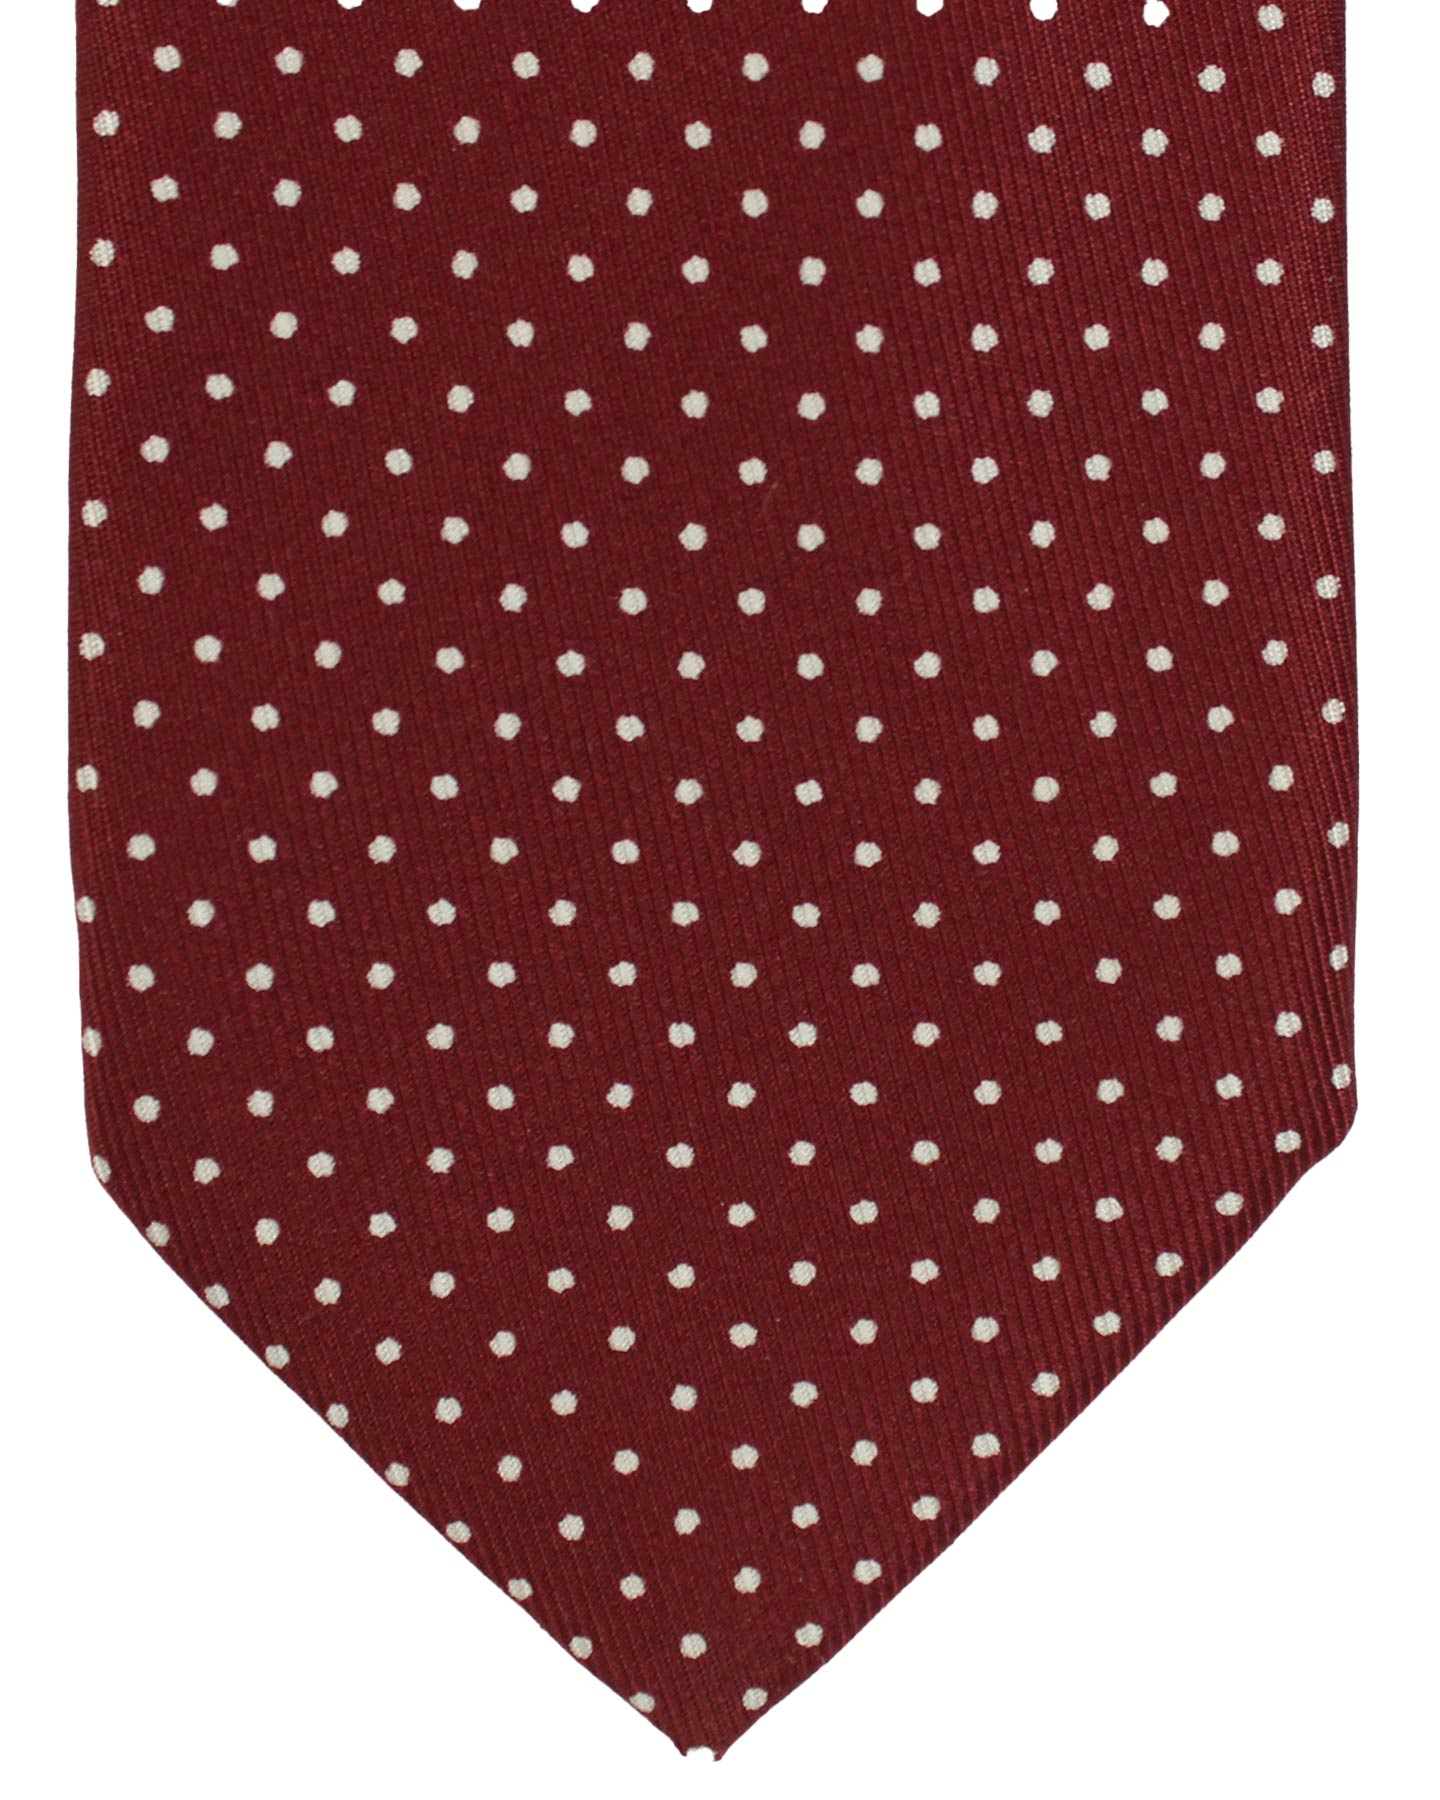 Bigi Milano Tie Bordeaux Dots - Sartorial Quality 50 Oz Silk